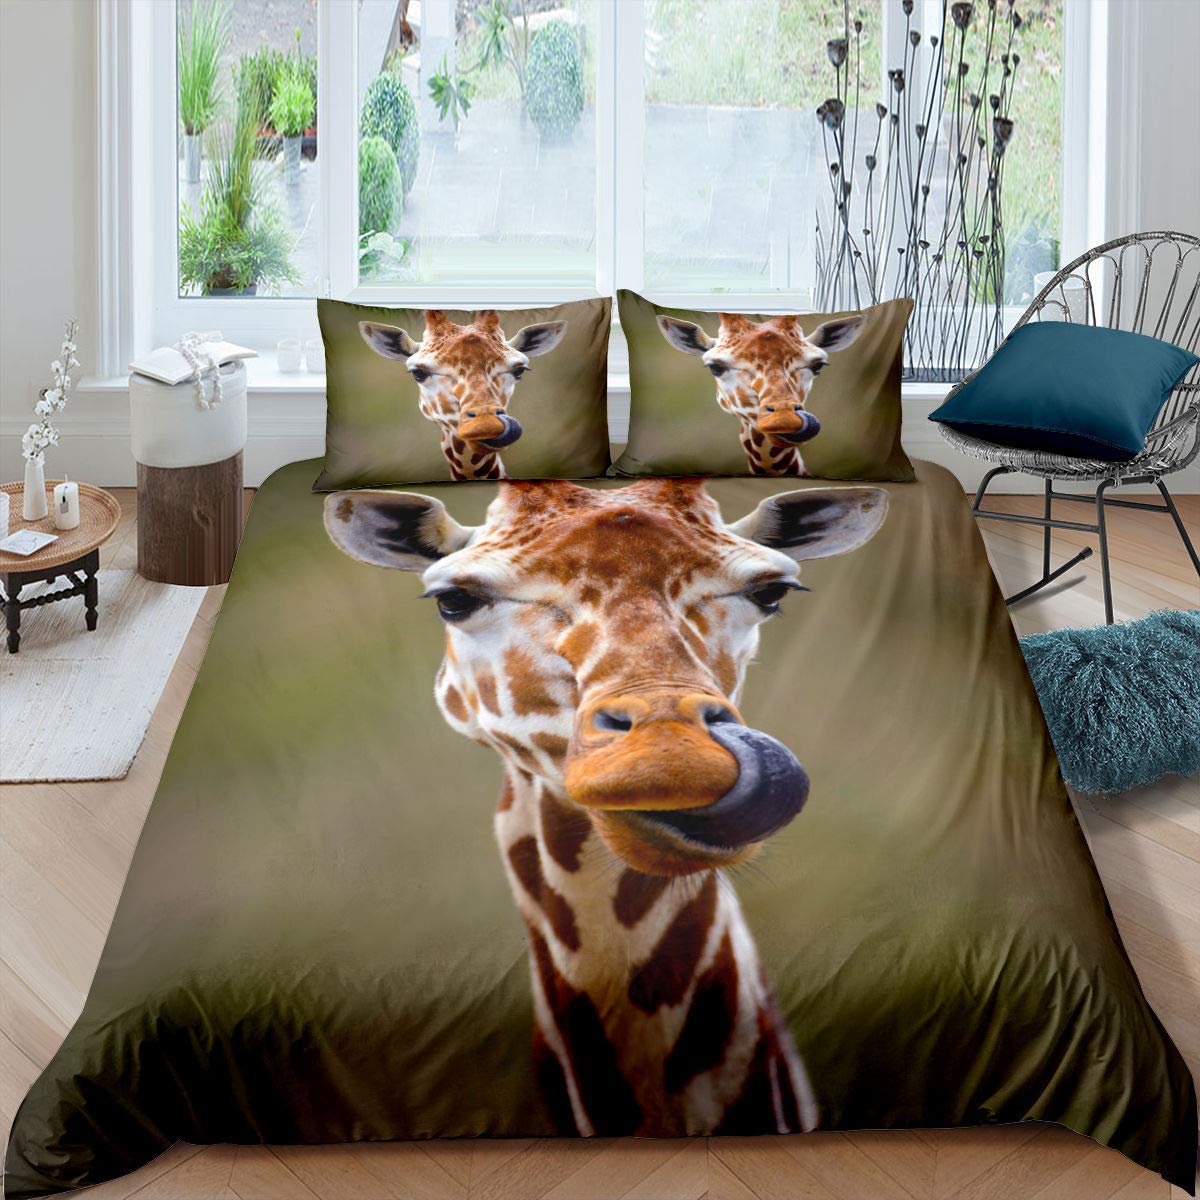 Cute giraffe duvet cover